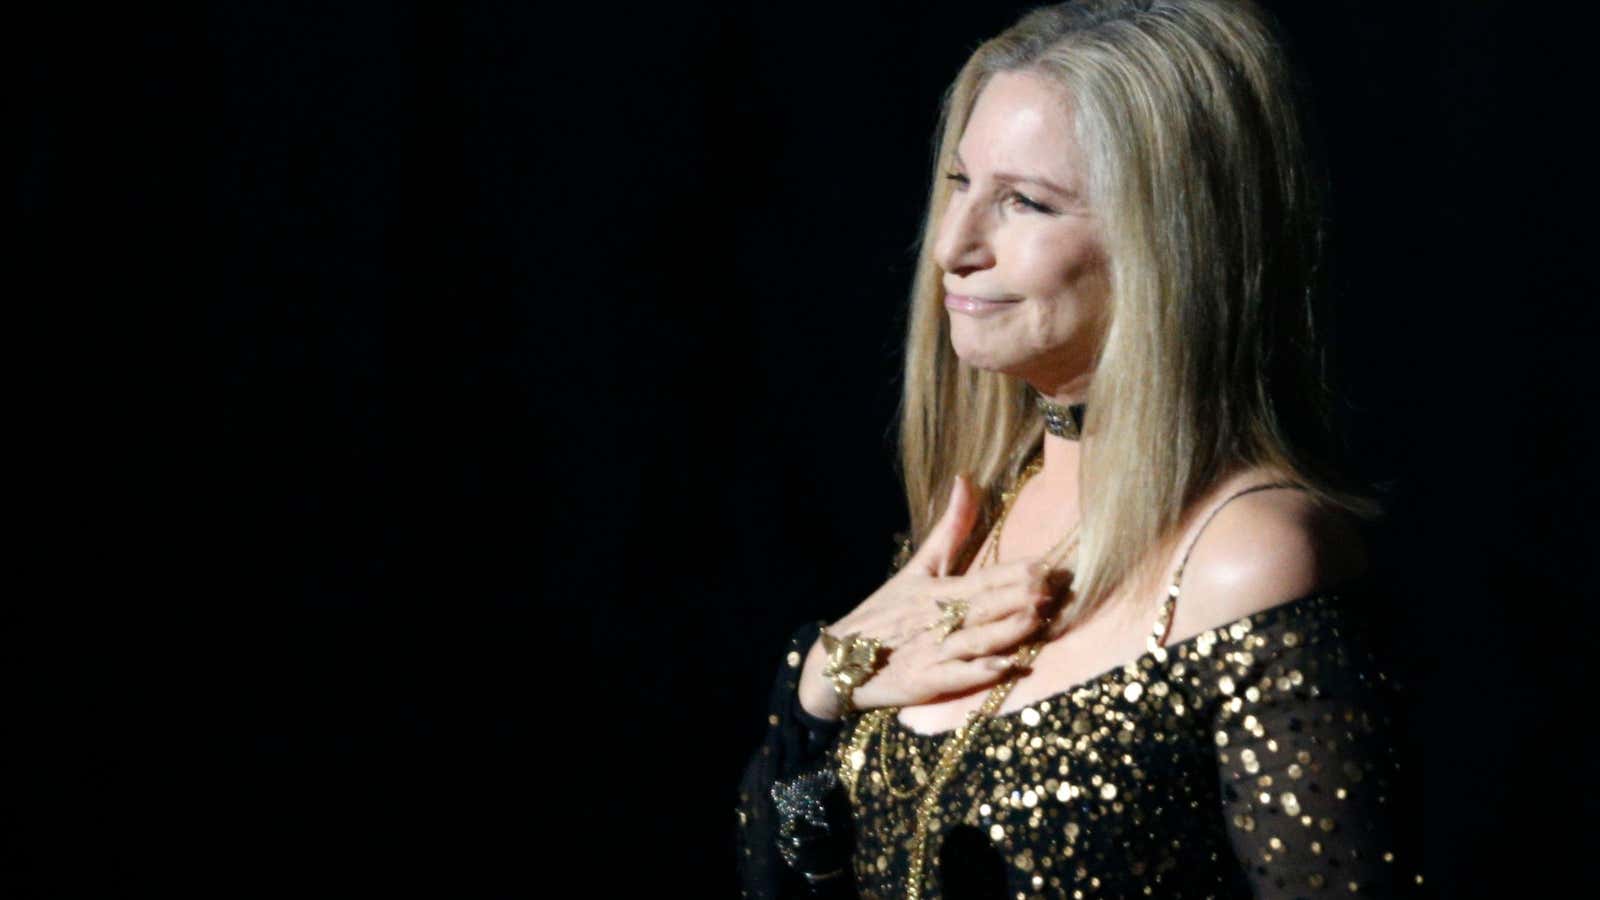 Did you know Barbra Streisand lives in Malibu?